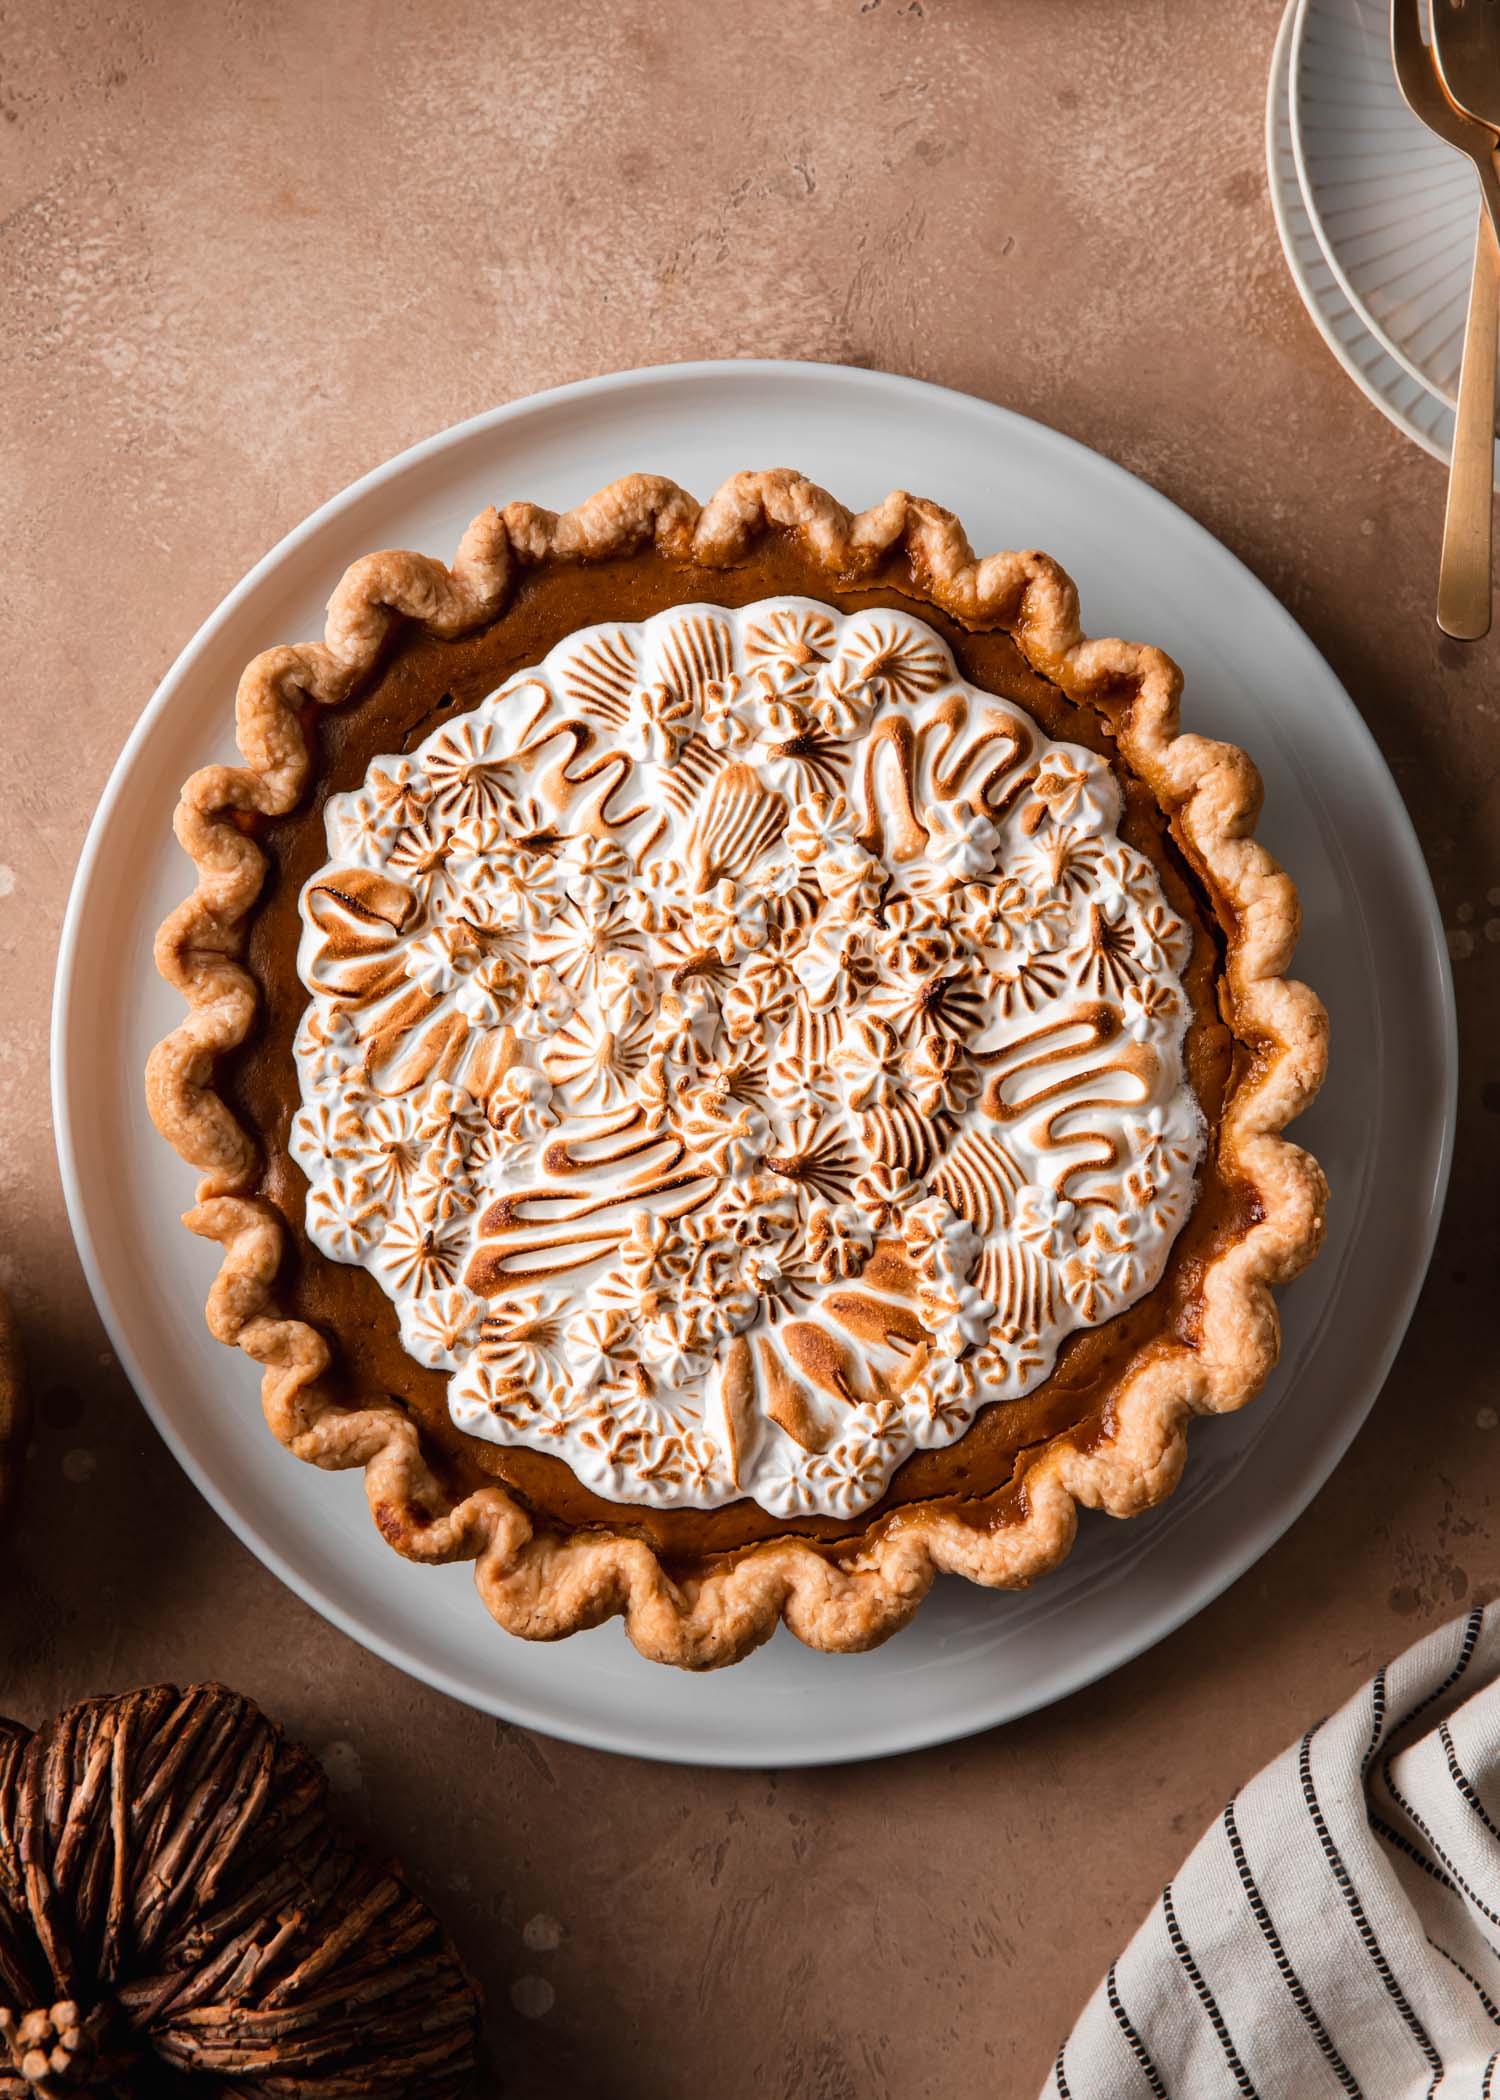 Pumpkin pie with meringue topping